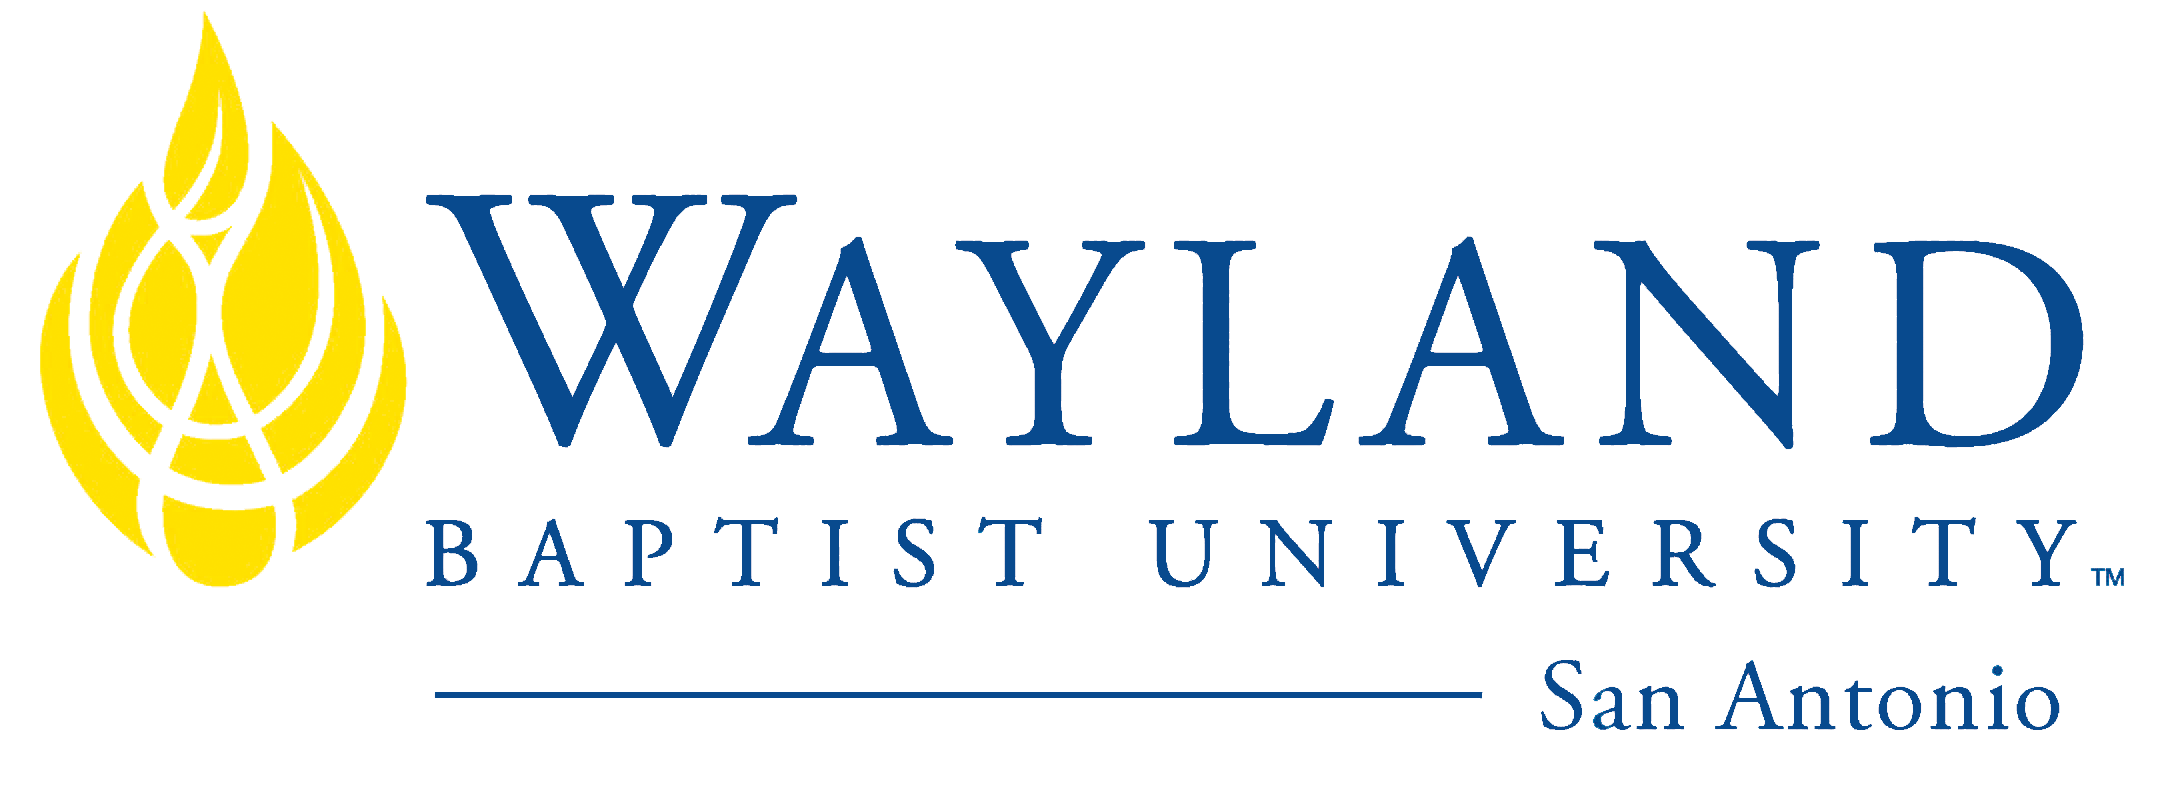 Wayland Baptist University Live Oak logo